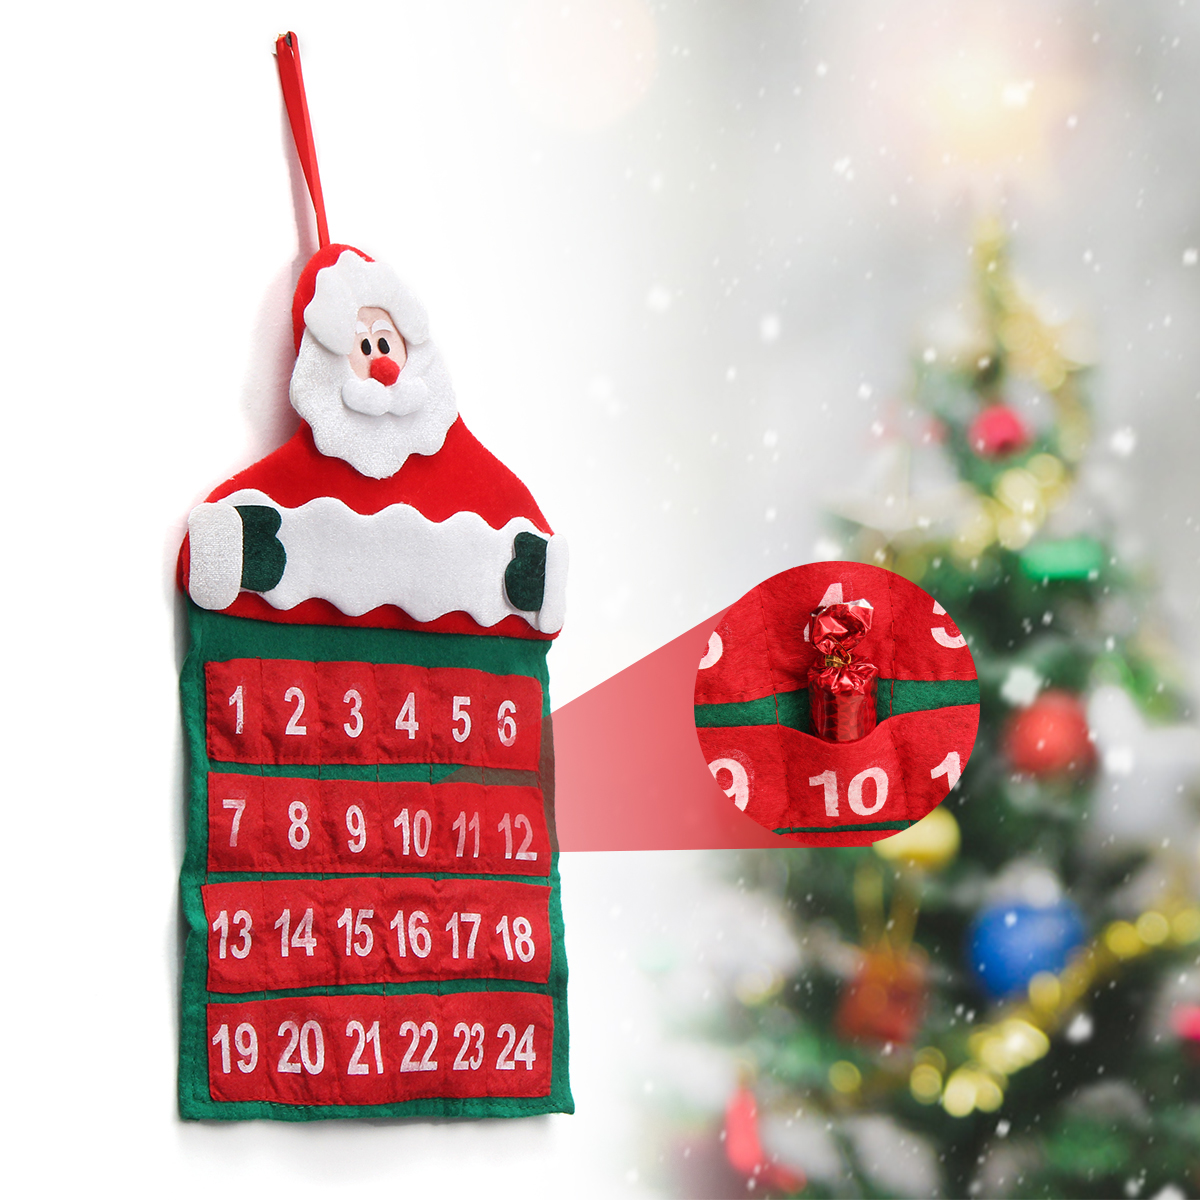 Felt-Christmas-Advent-Wall-Hanging-Calendar-Pockets-Santa-Reindeer-Snowman-Decorations-1462546-8